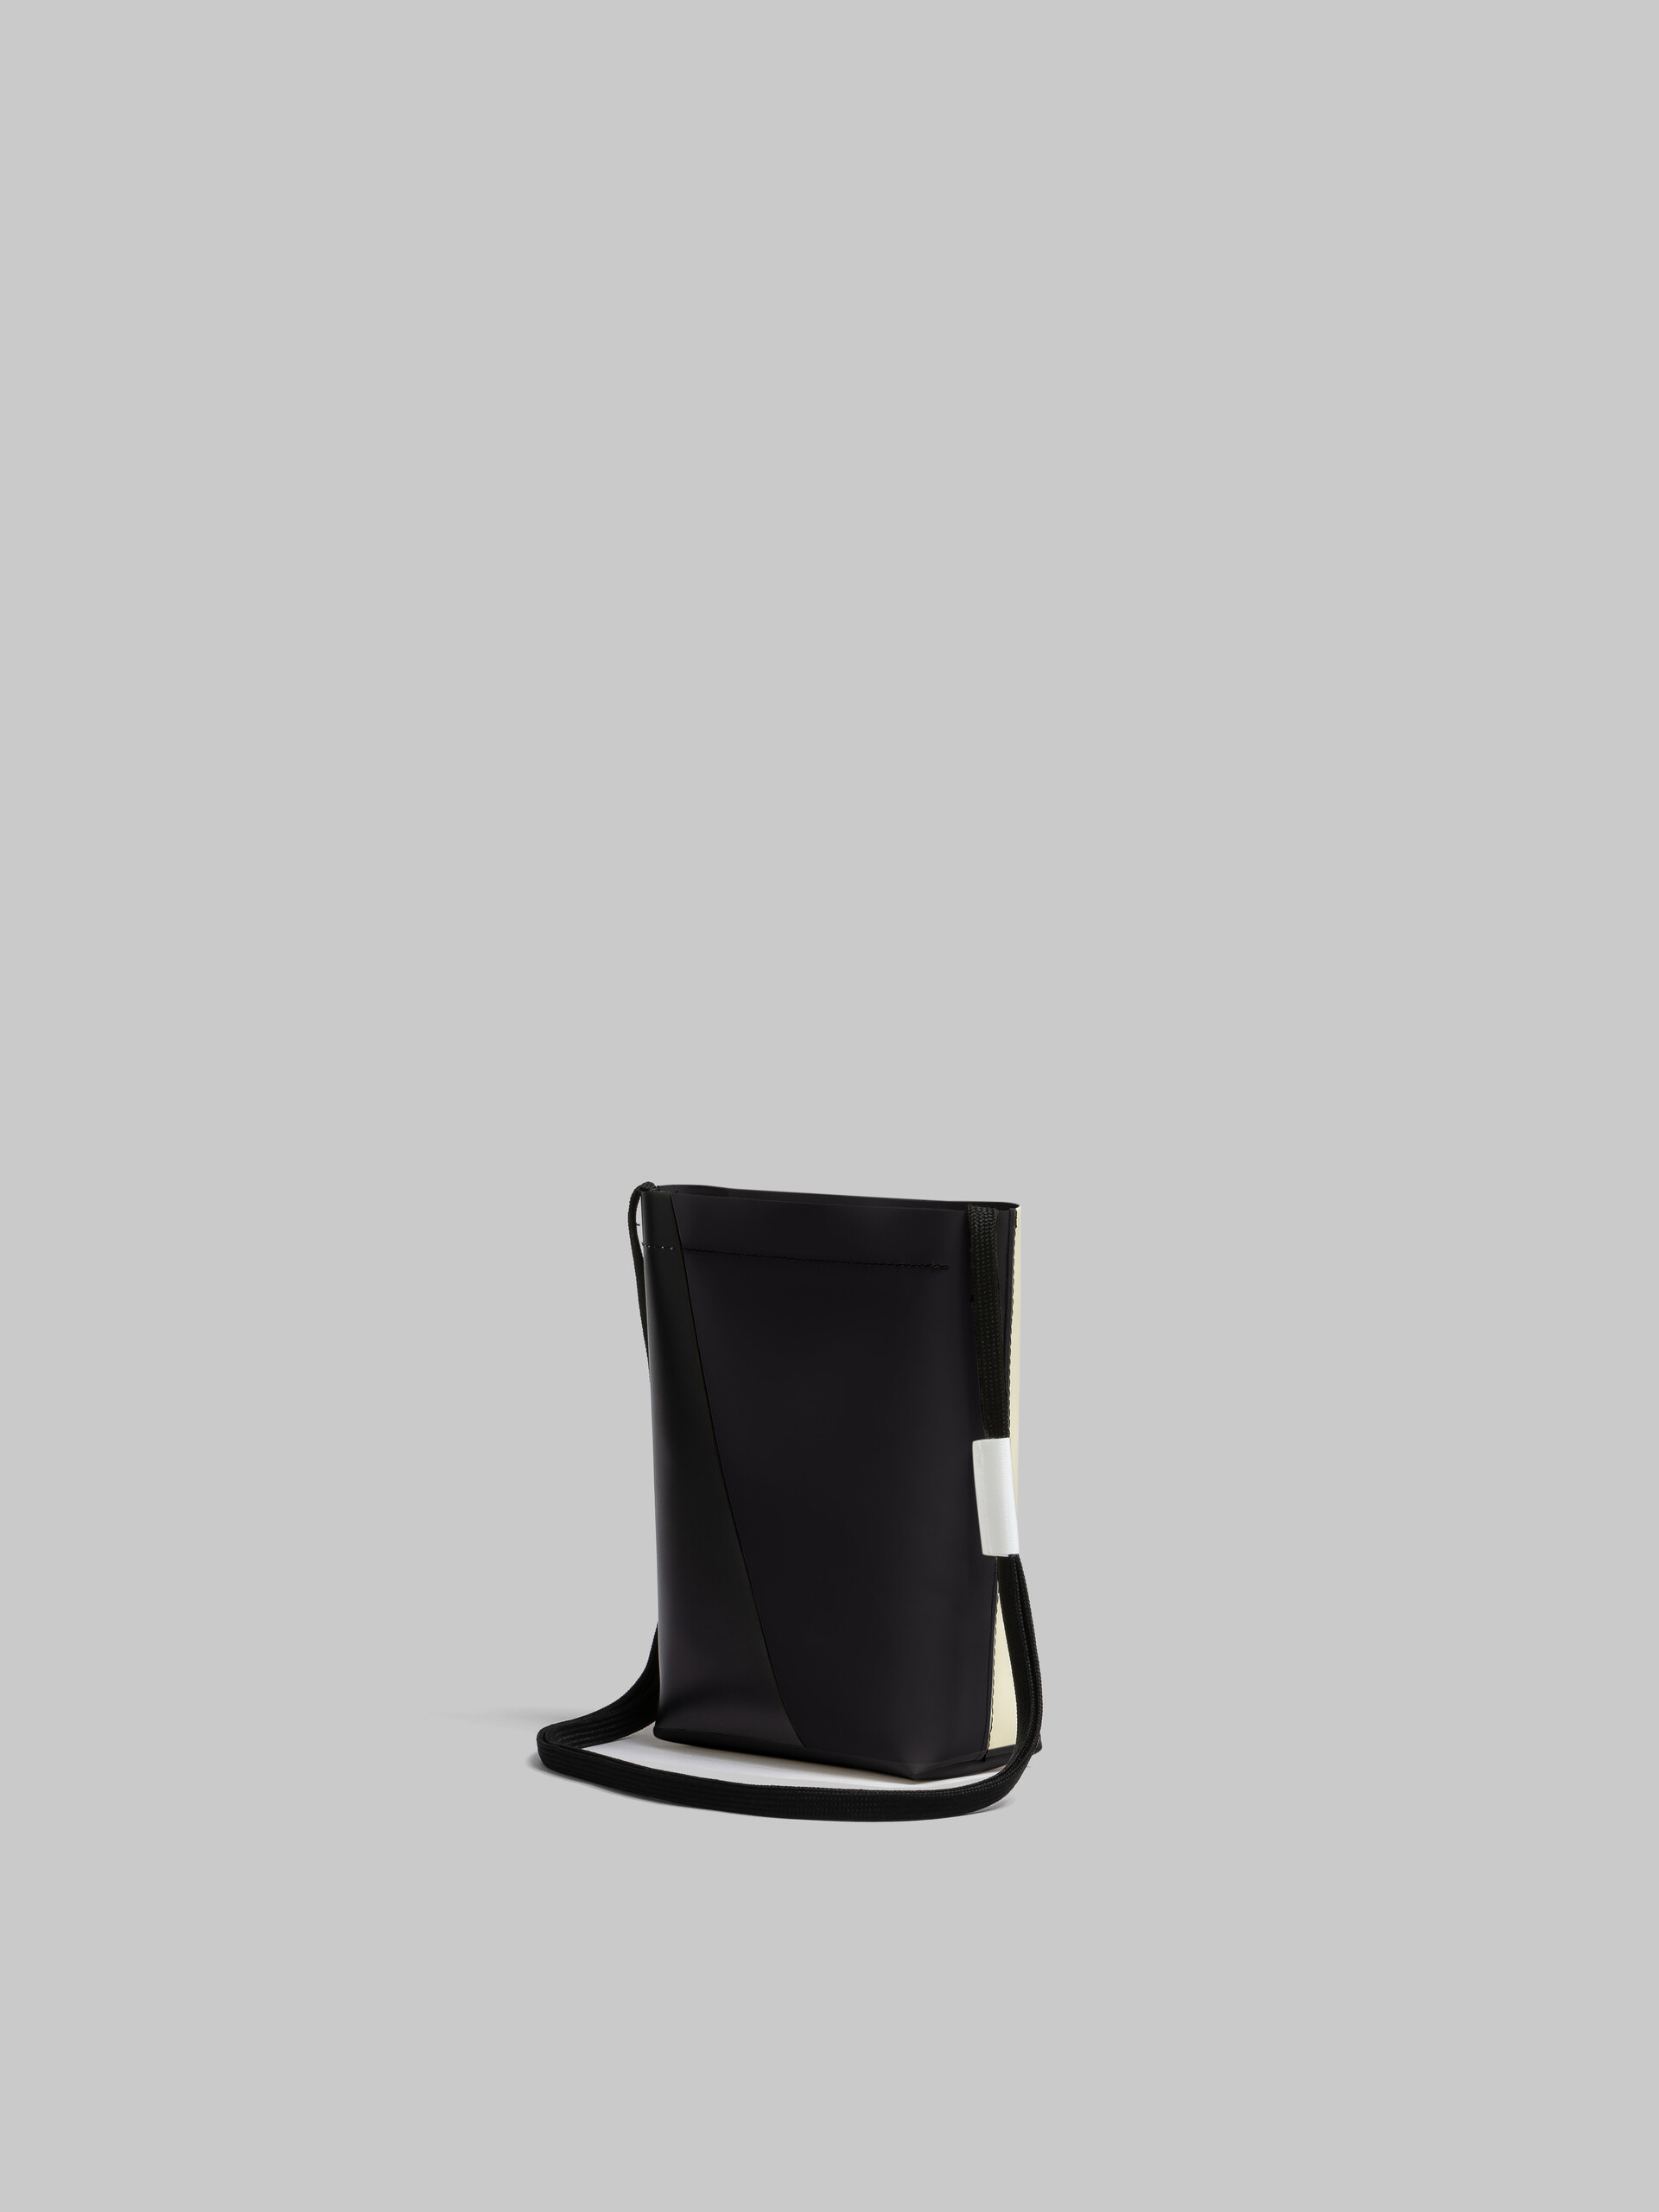 White and black Tribeca crossbody bag with shoelace strap - Shoulder Bag - Image 3